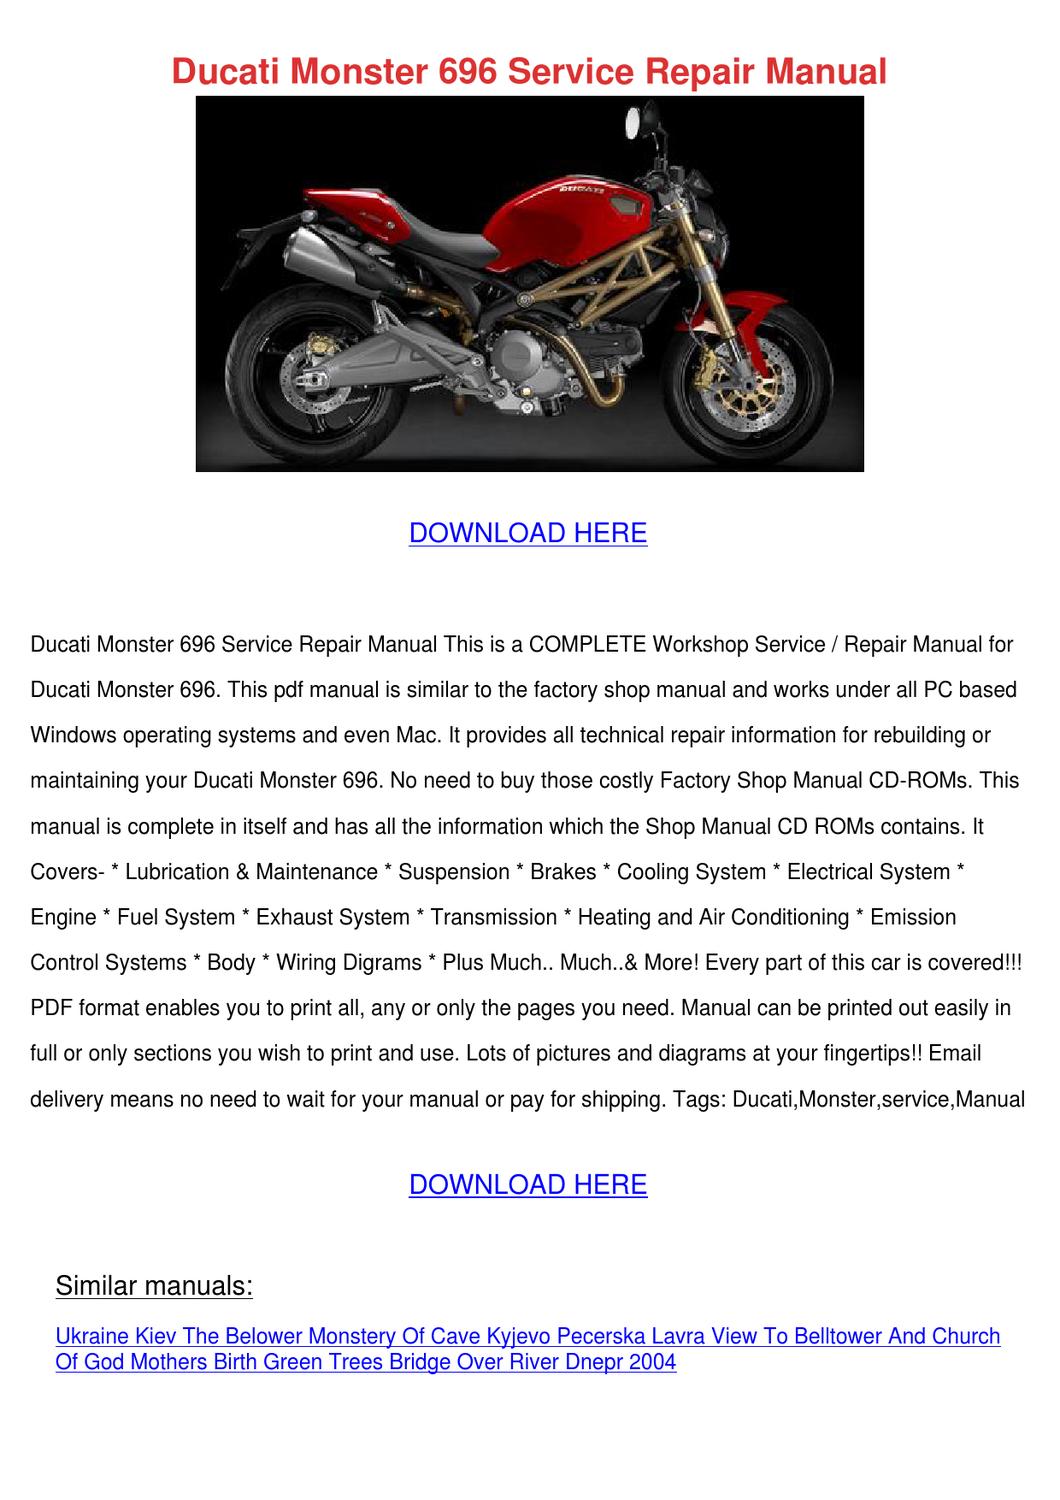 Ducati monster 696 maintenance manual